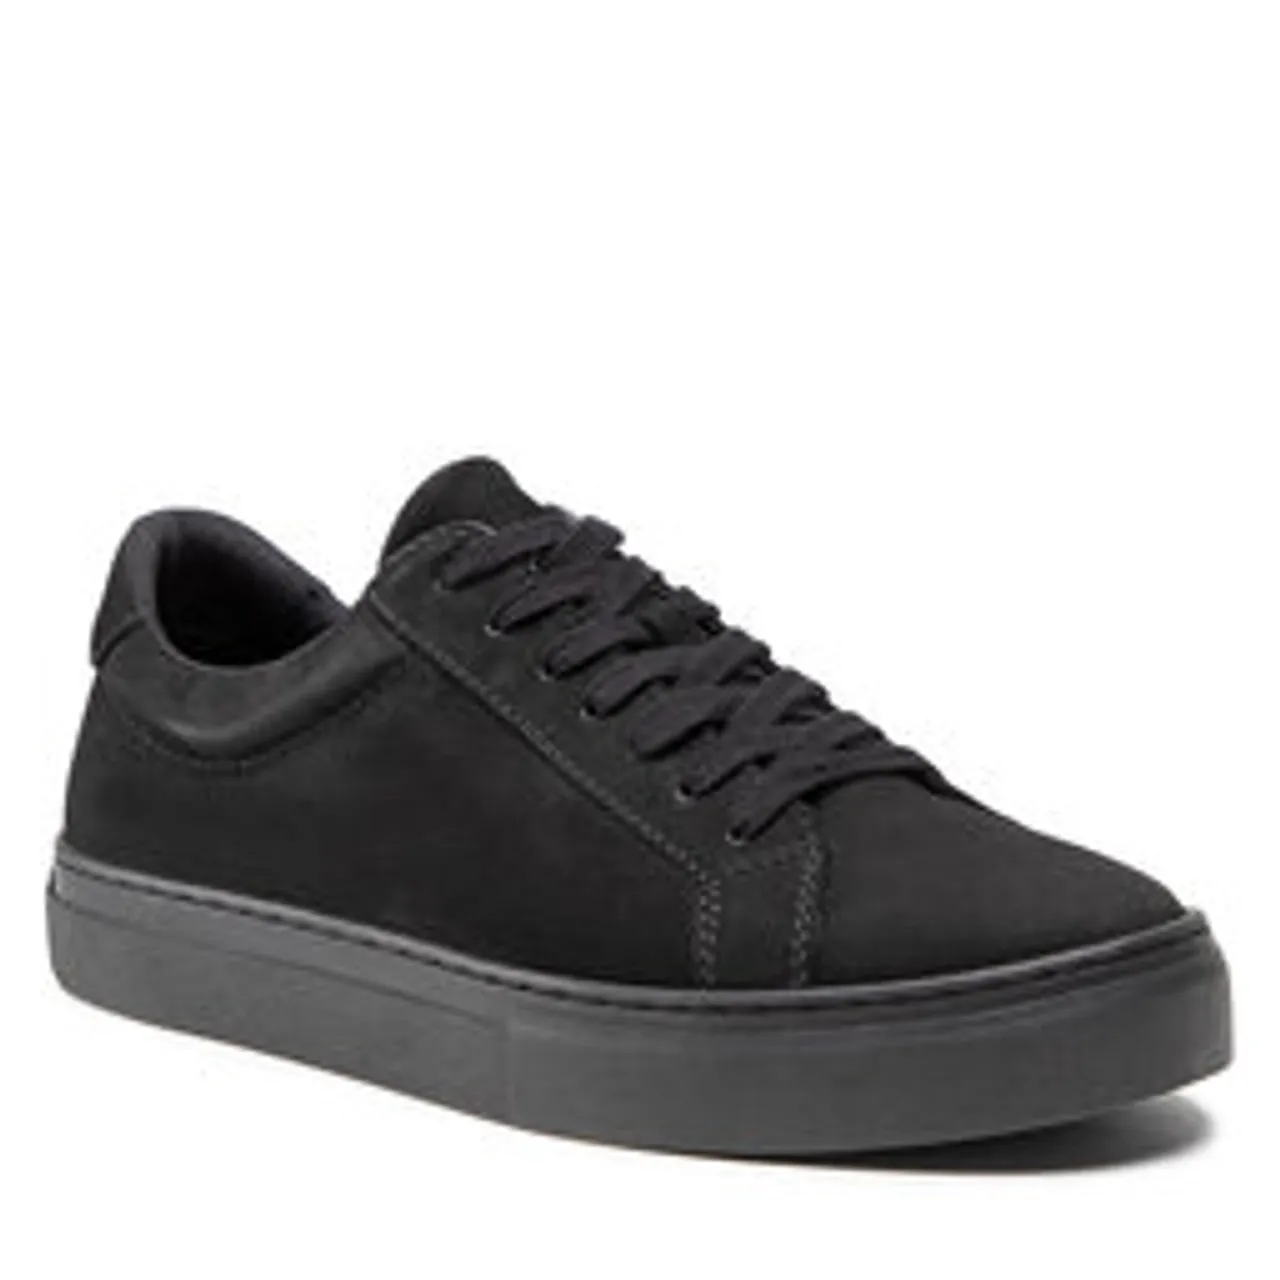 Sneakers Vagabond Paul 2.0 5383-050-92 Black/Black